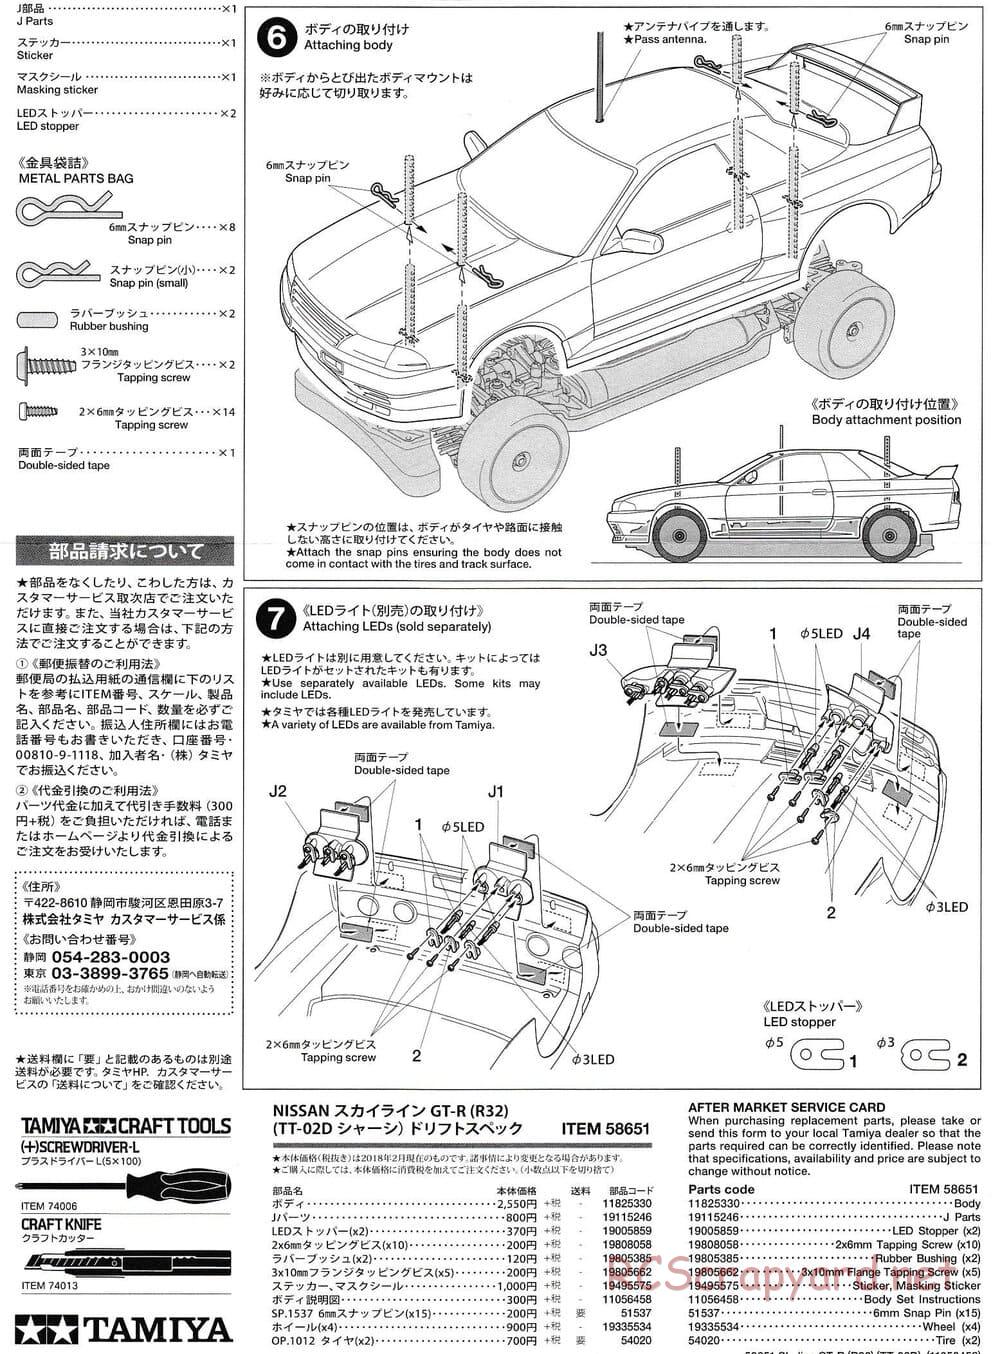 Tamiya - Nissan Skyline GT-R R32 - TT-02D Chassis - Body Manual - Page 5